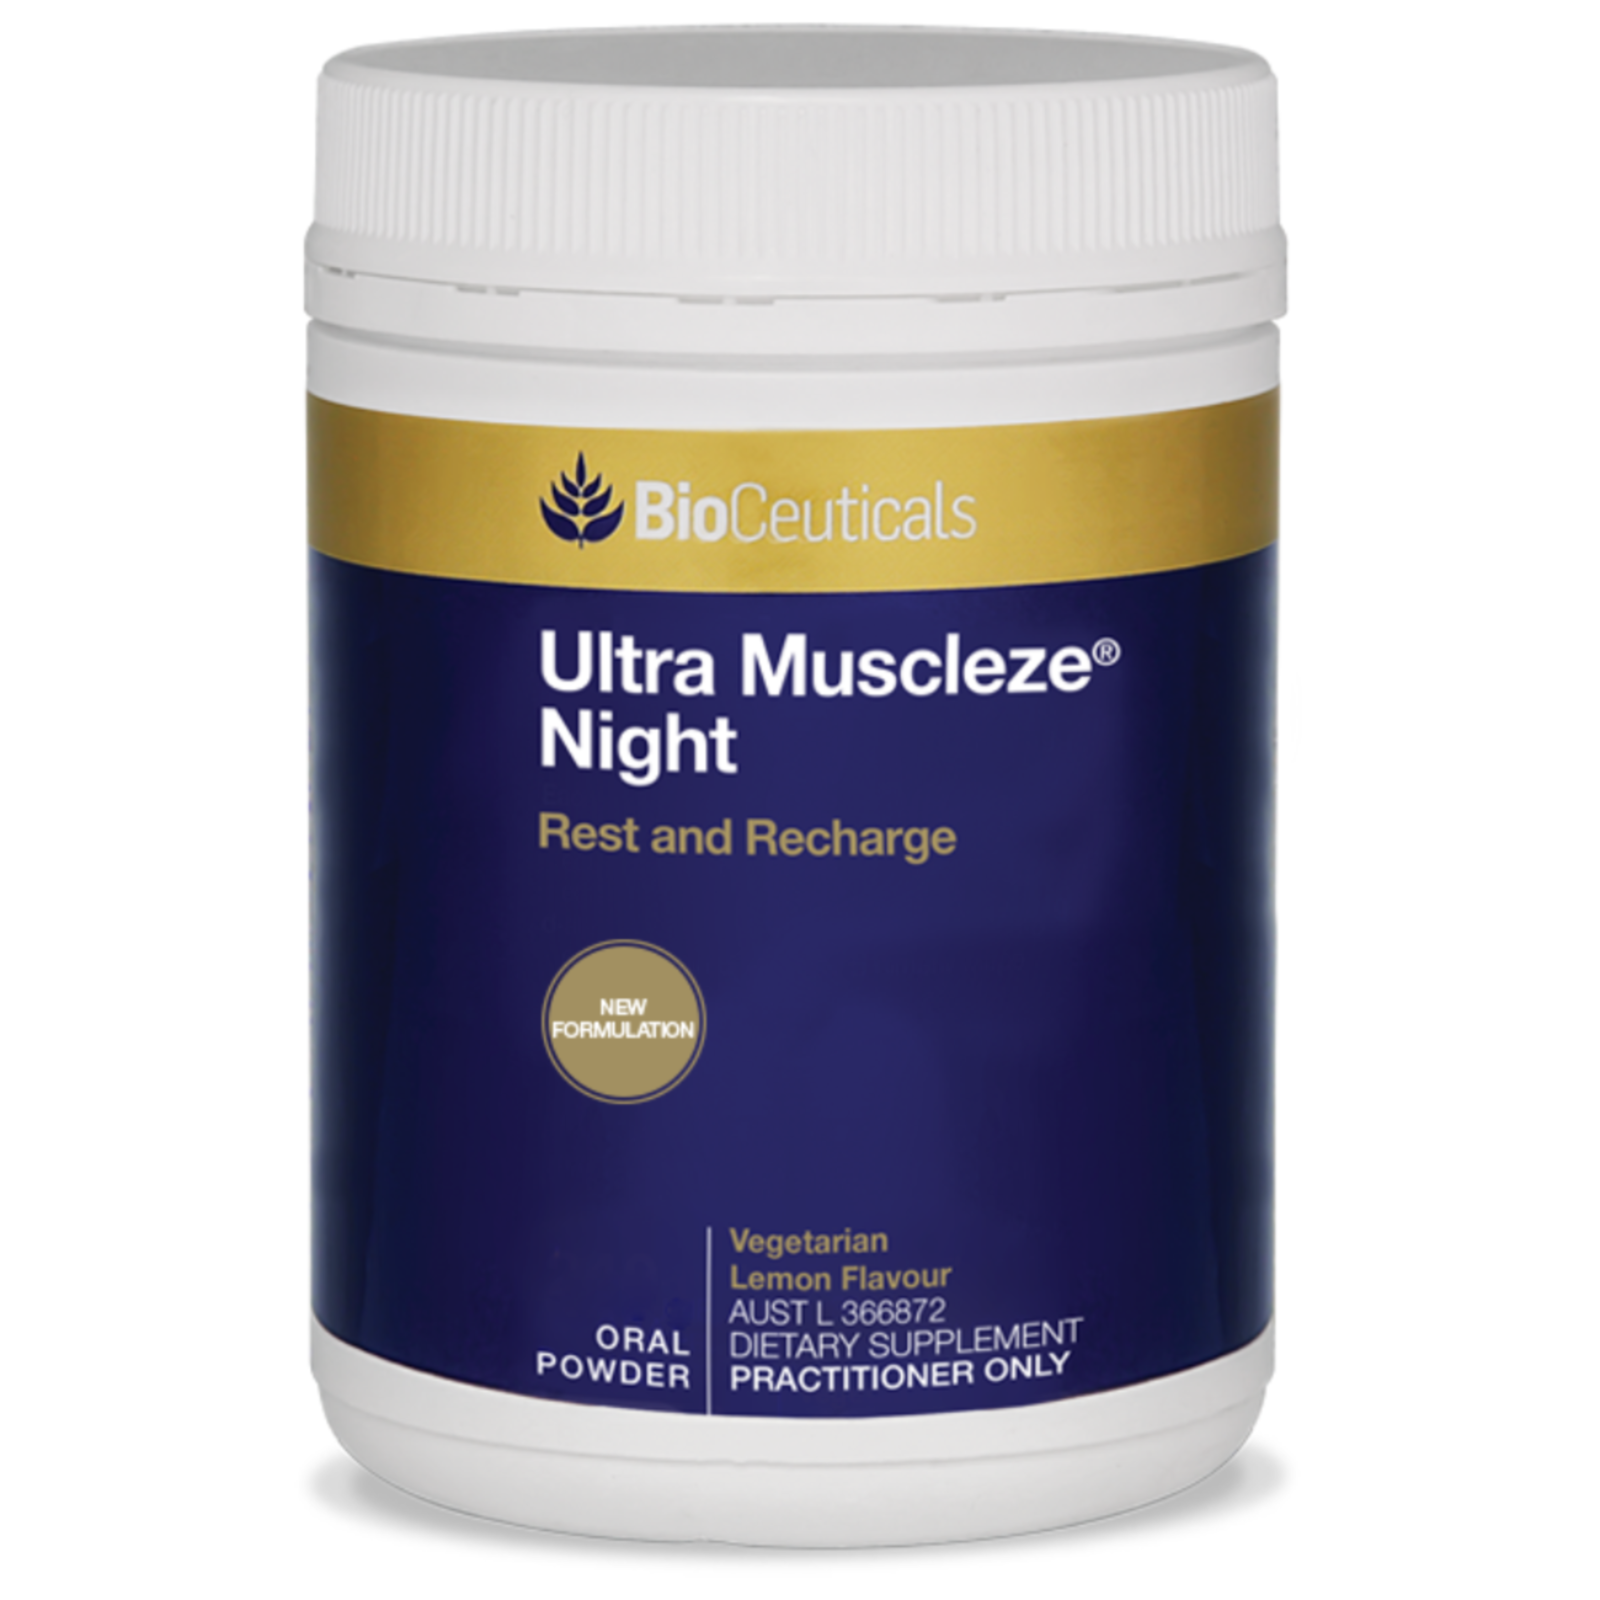 BioCeuticals Ultra Muscleze Night - 400g Oral Powder (Lemon Flavour) - $143.02